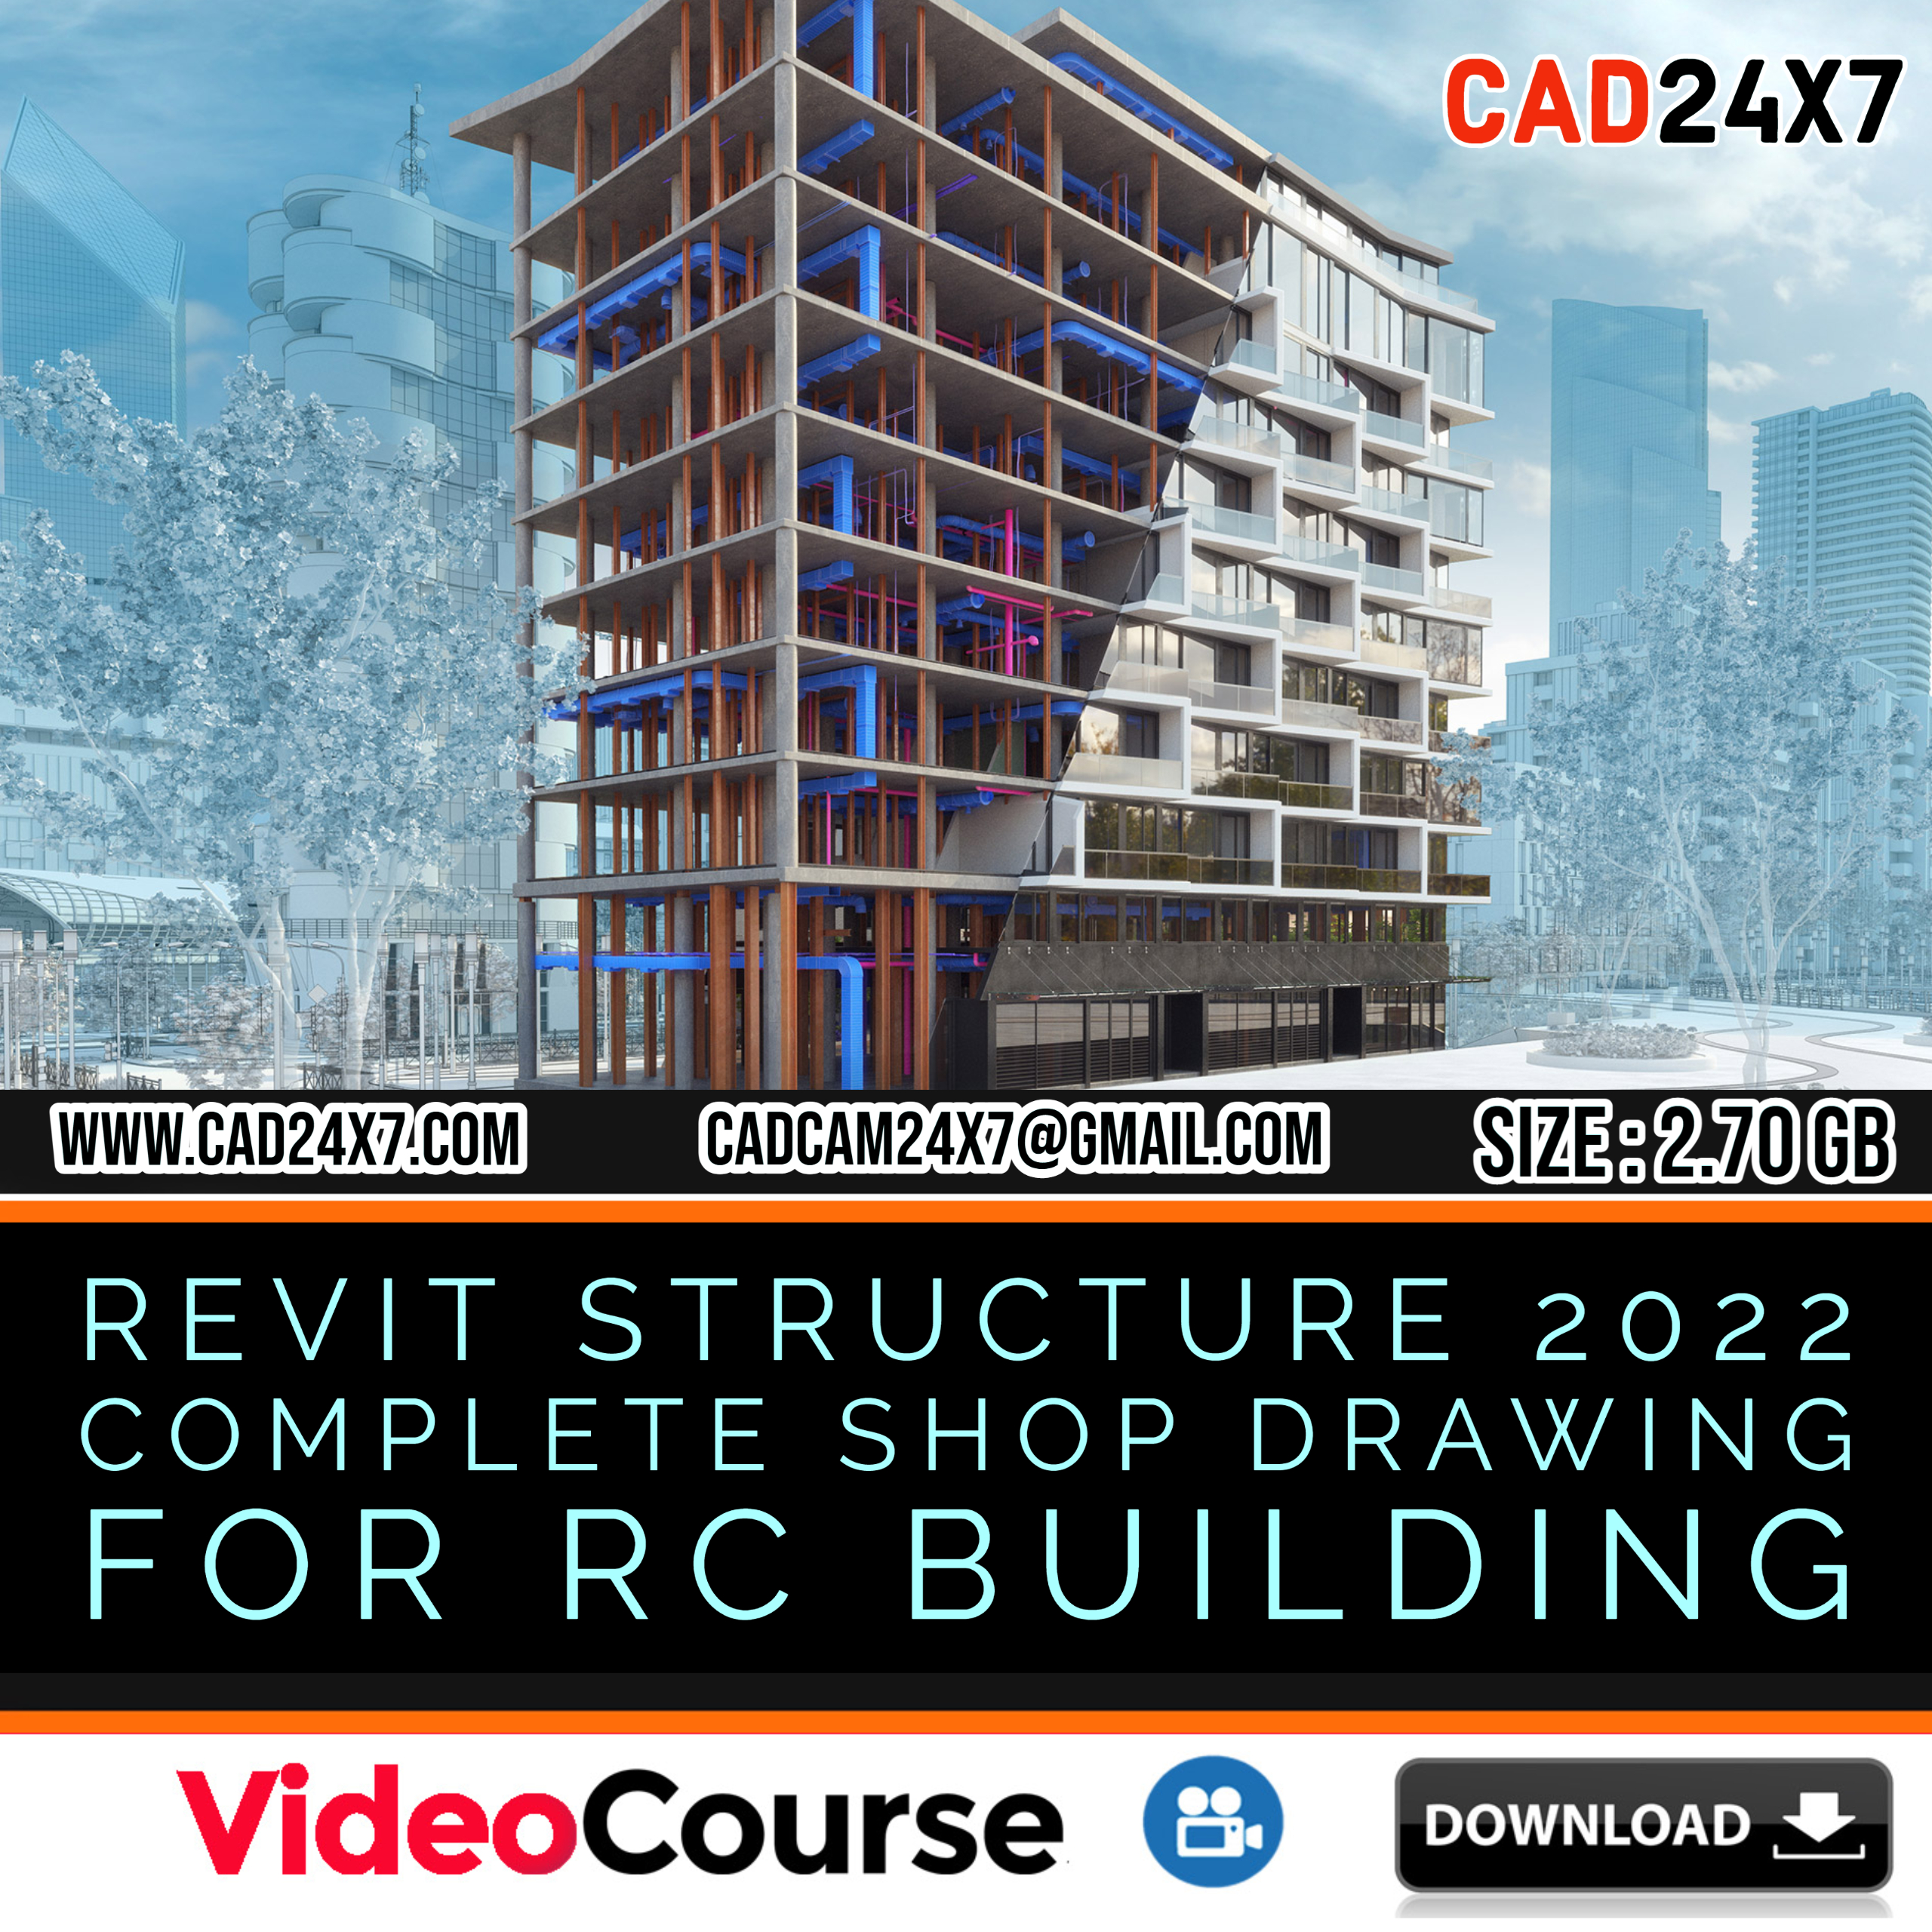 Revit Structure 2022 Complete Shop Drawing for RC Building